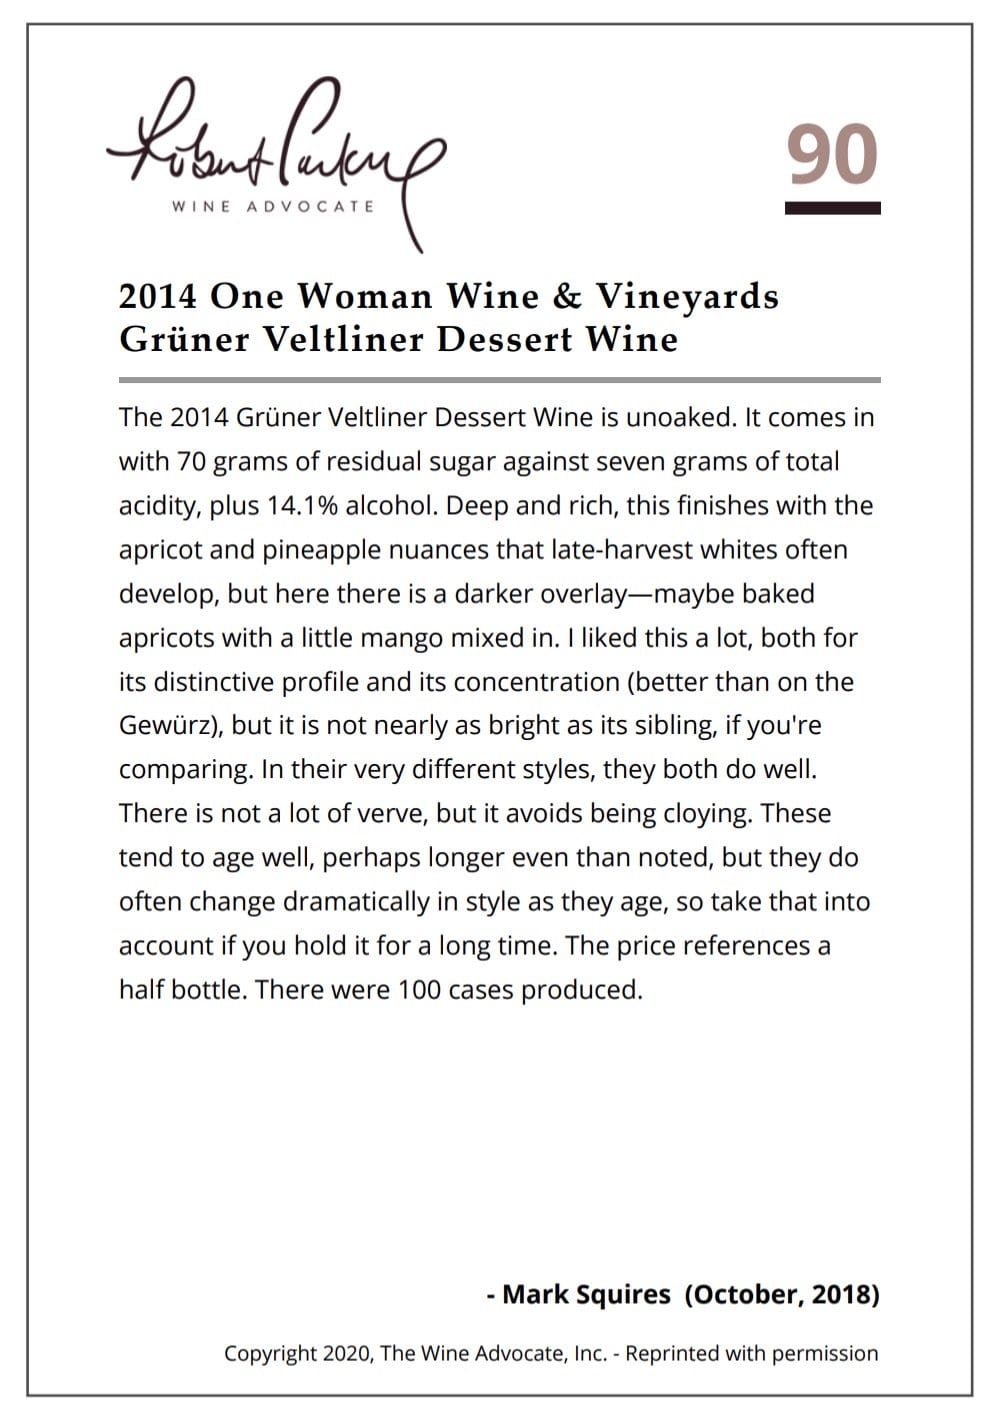 2014 One Woman Grüner Veltliner Dessert Wine - One Woman Winery